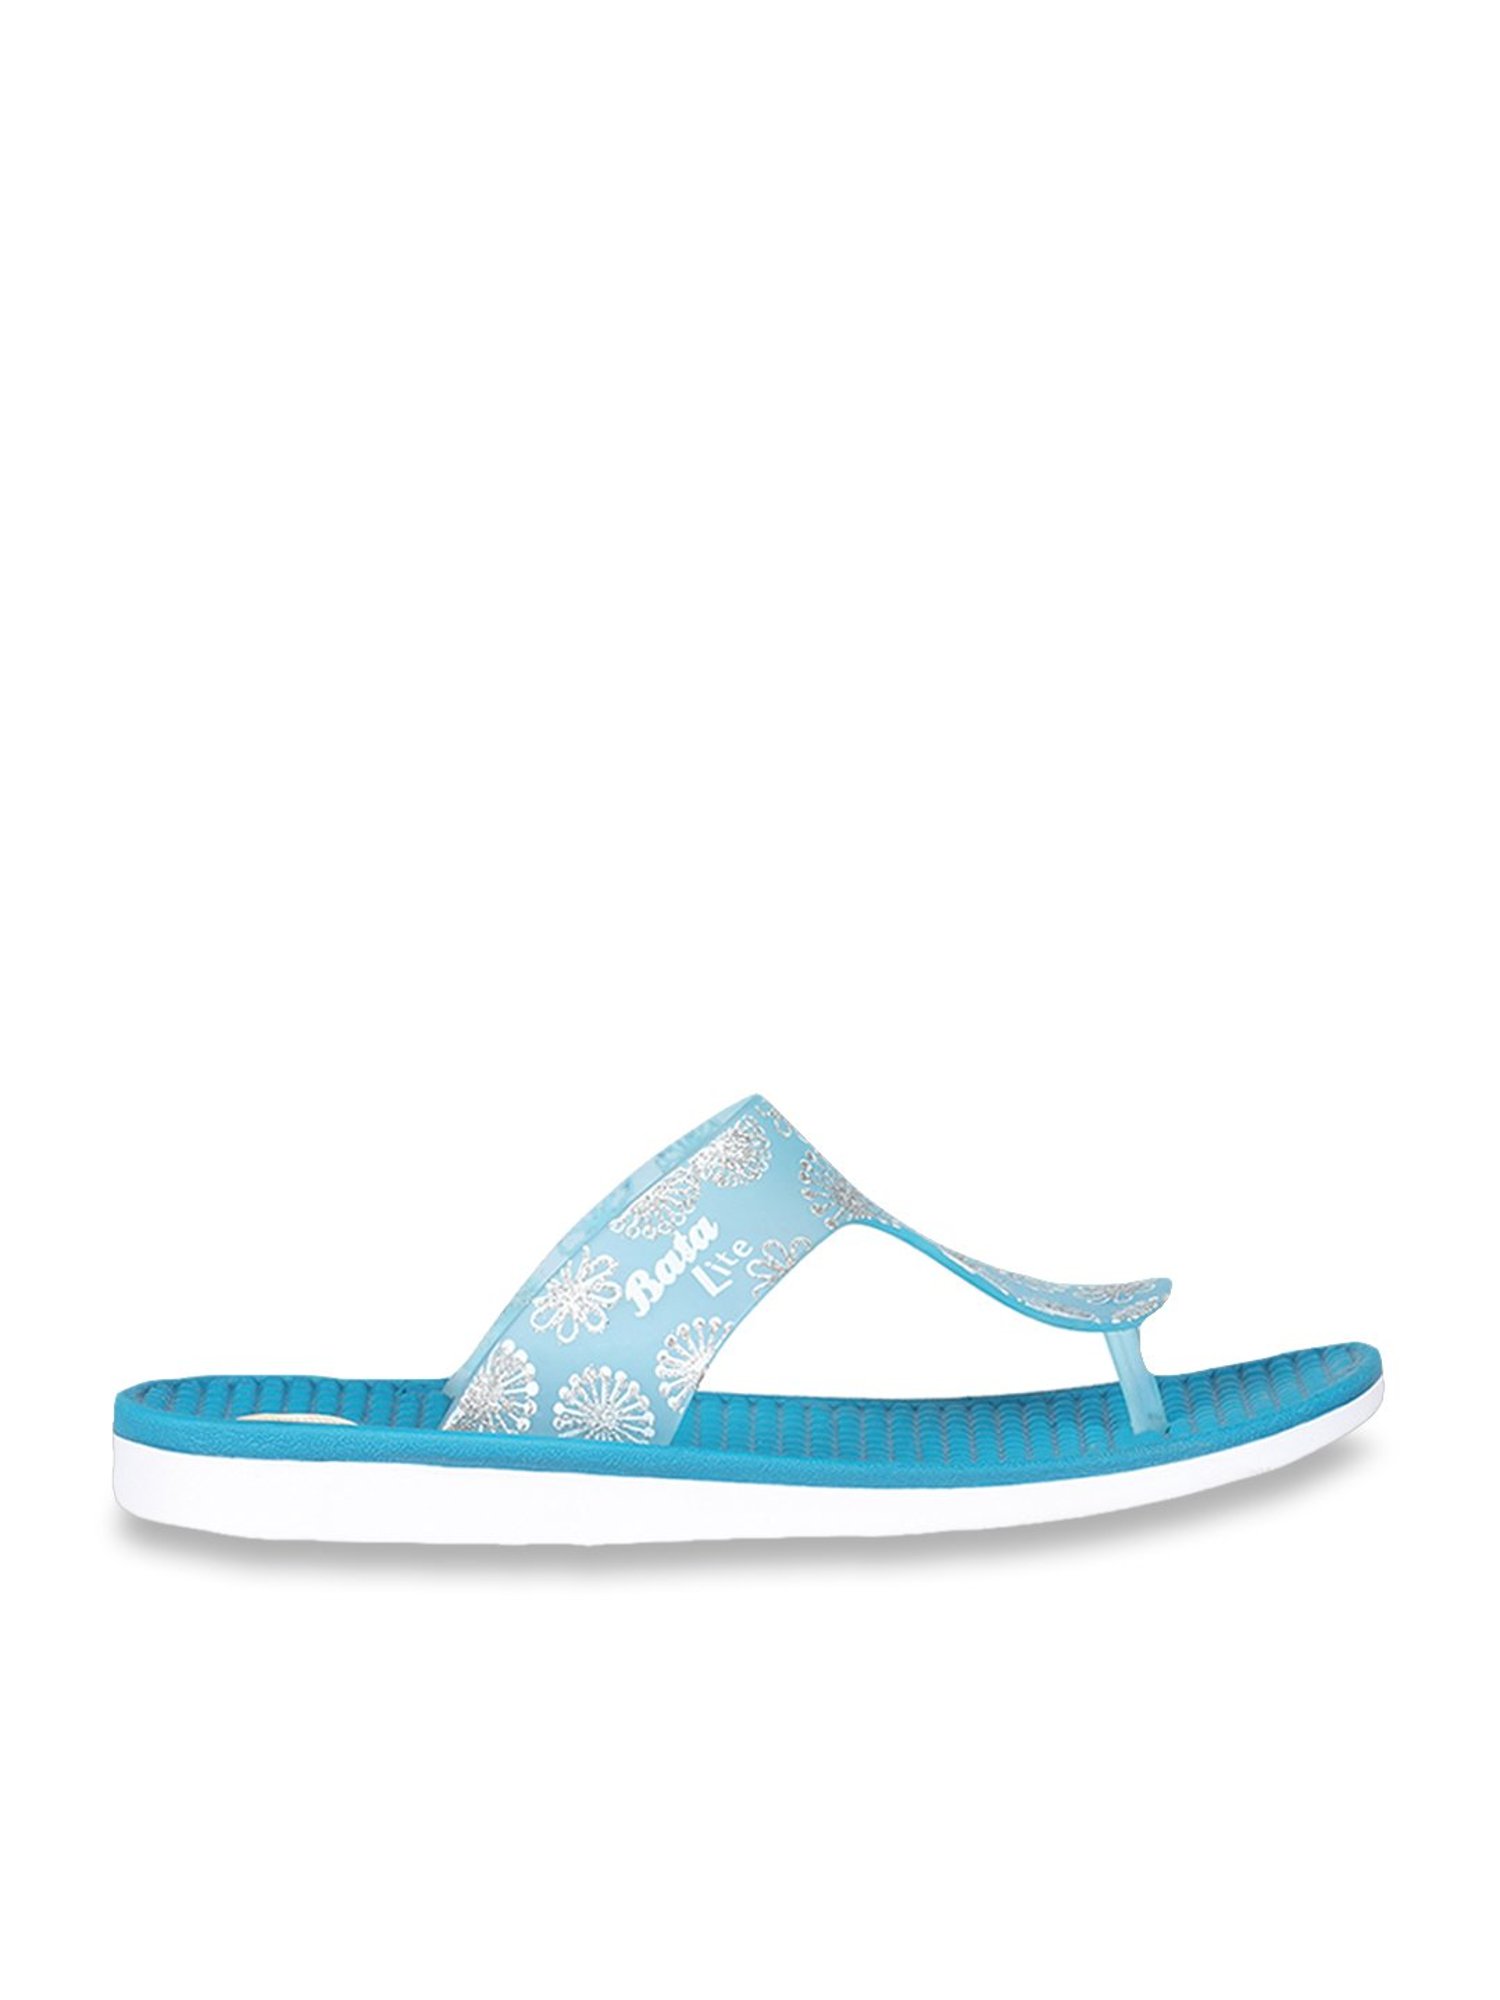 bata blue and white slippers